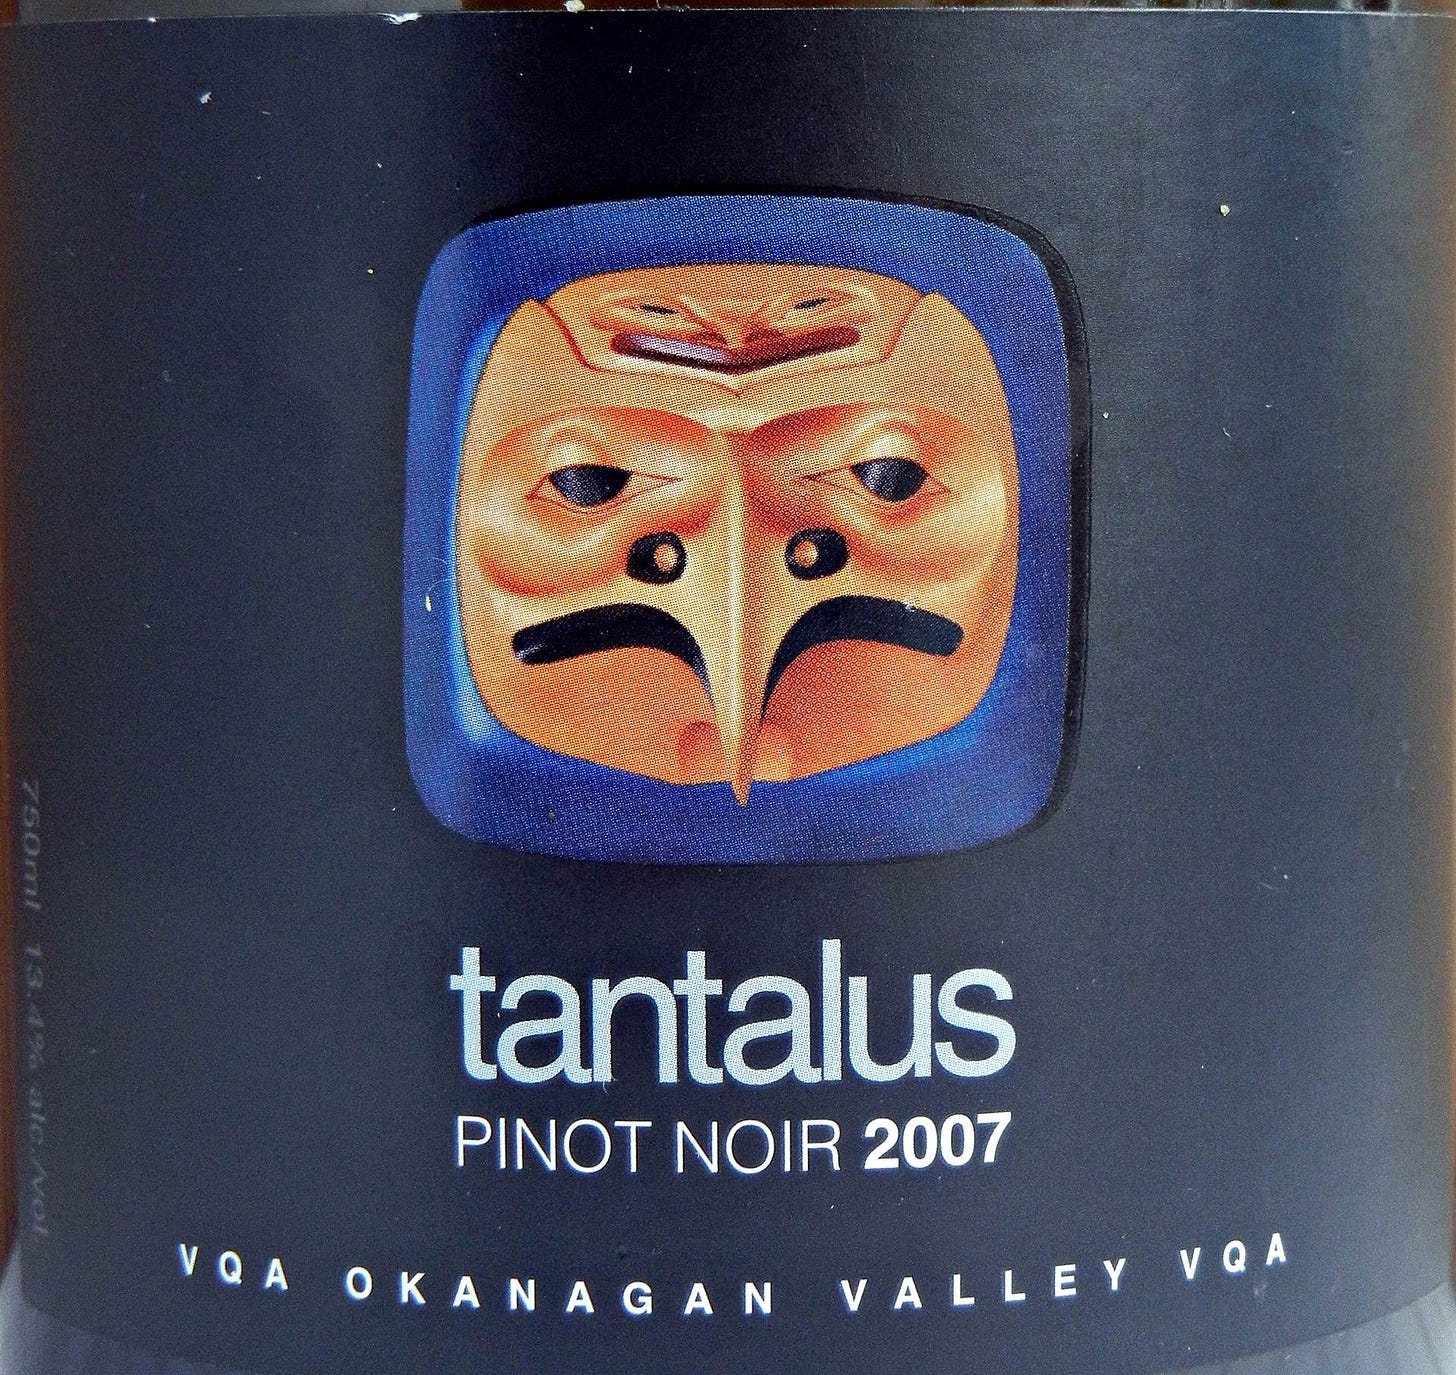 Tantalus Pinot Noir 2007 Label - BC Pinot Noir Tasting Review 2 